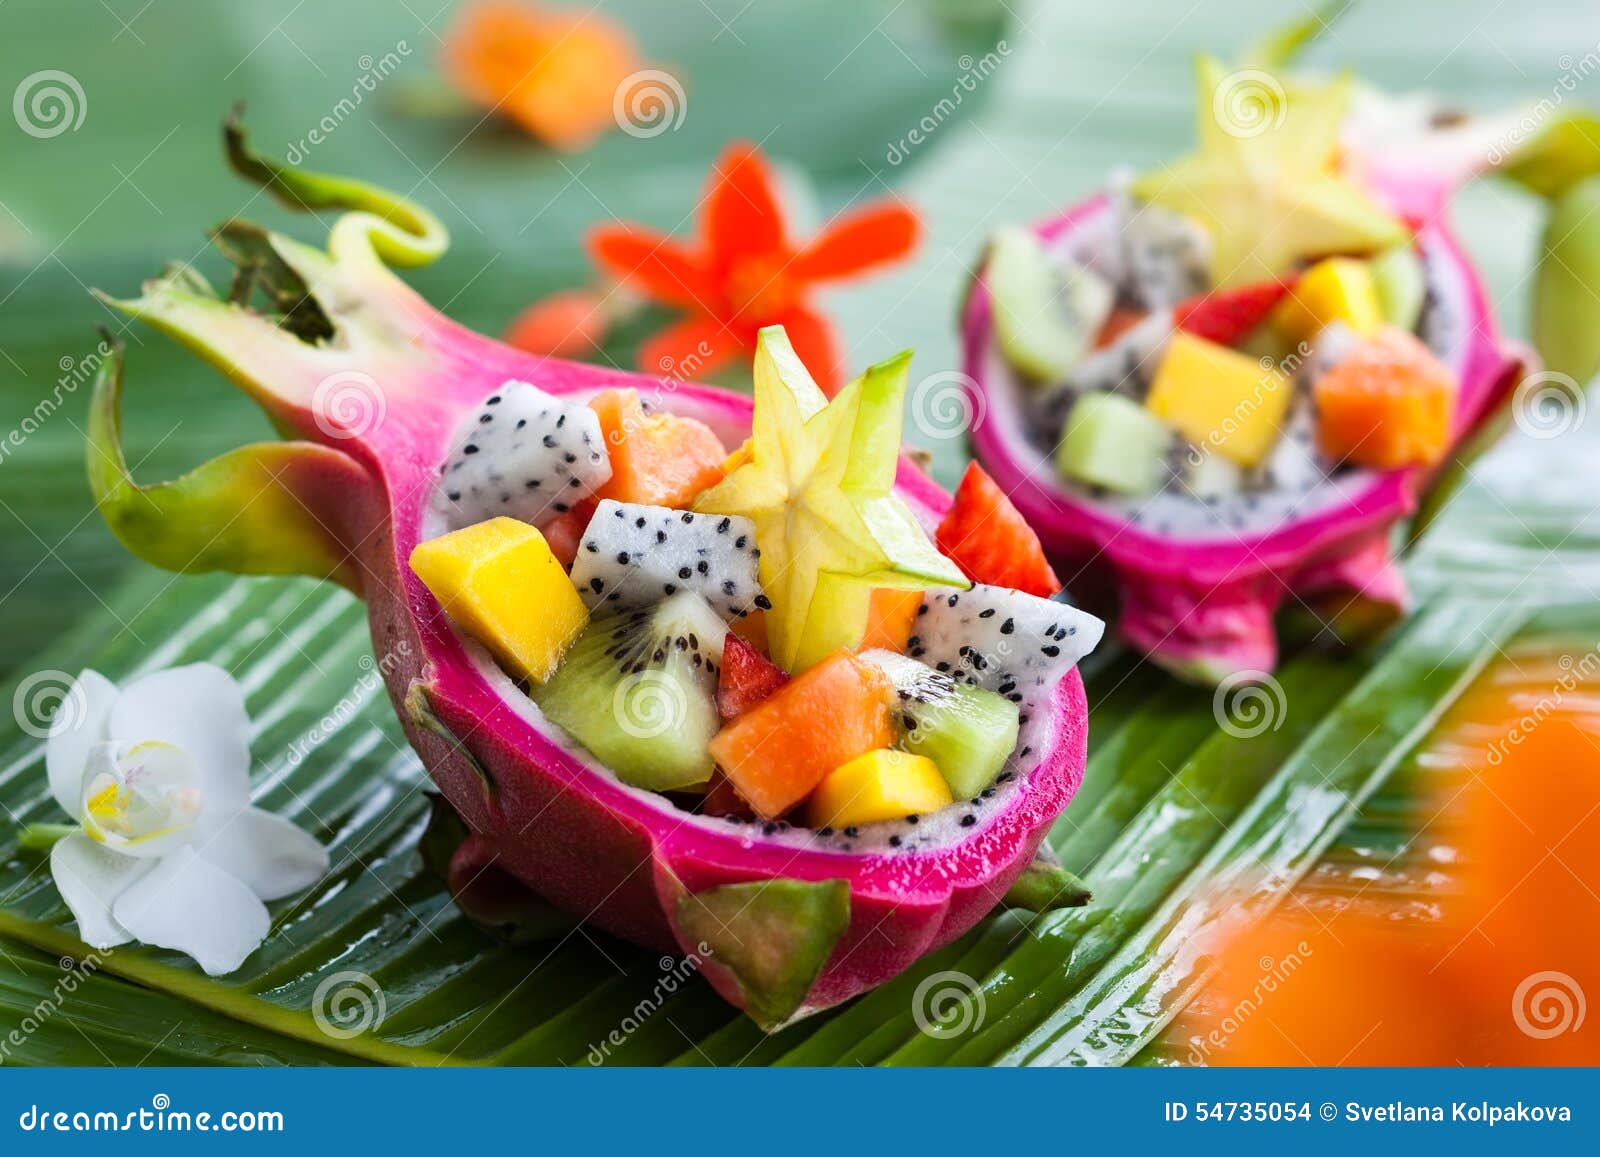 exotic fruit salad